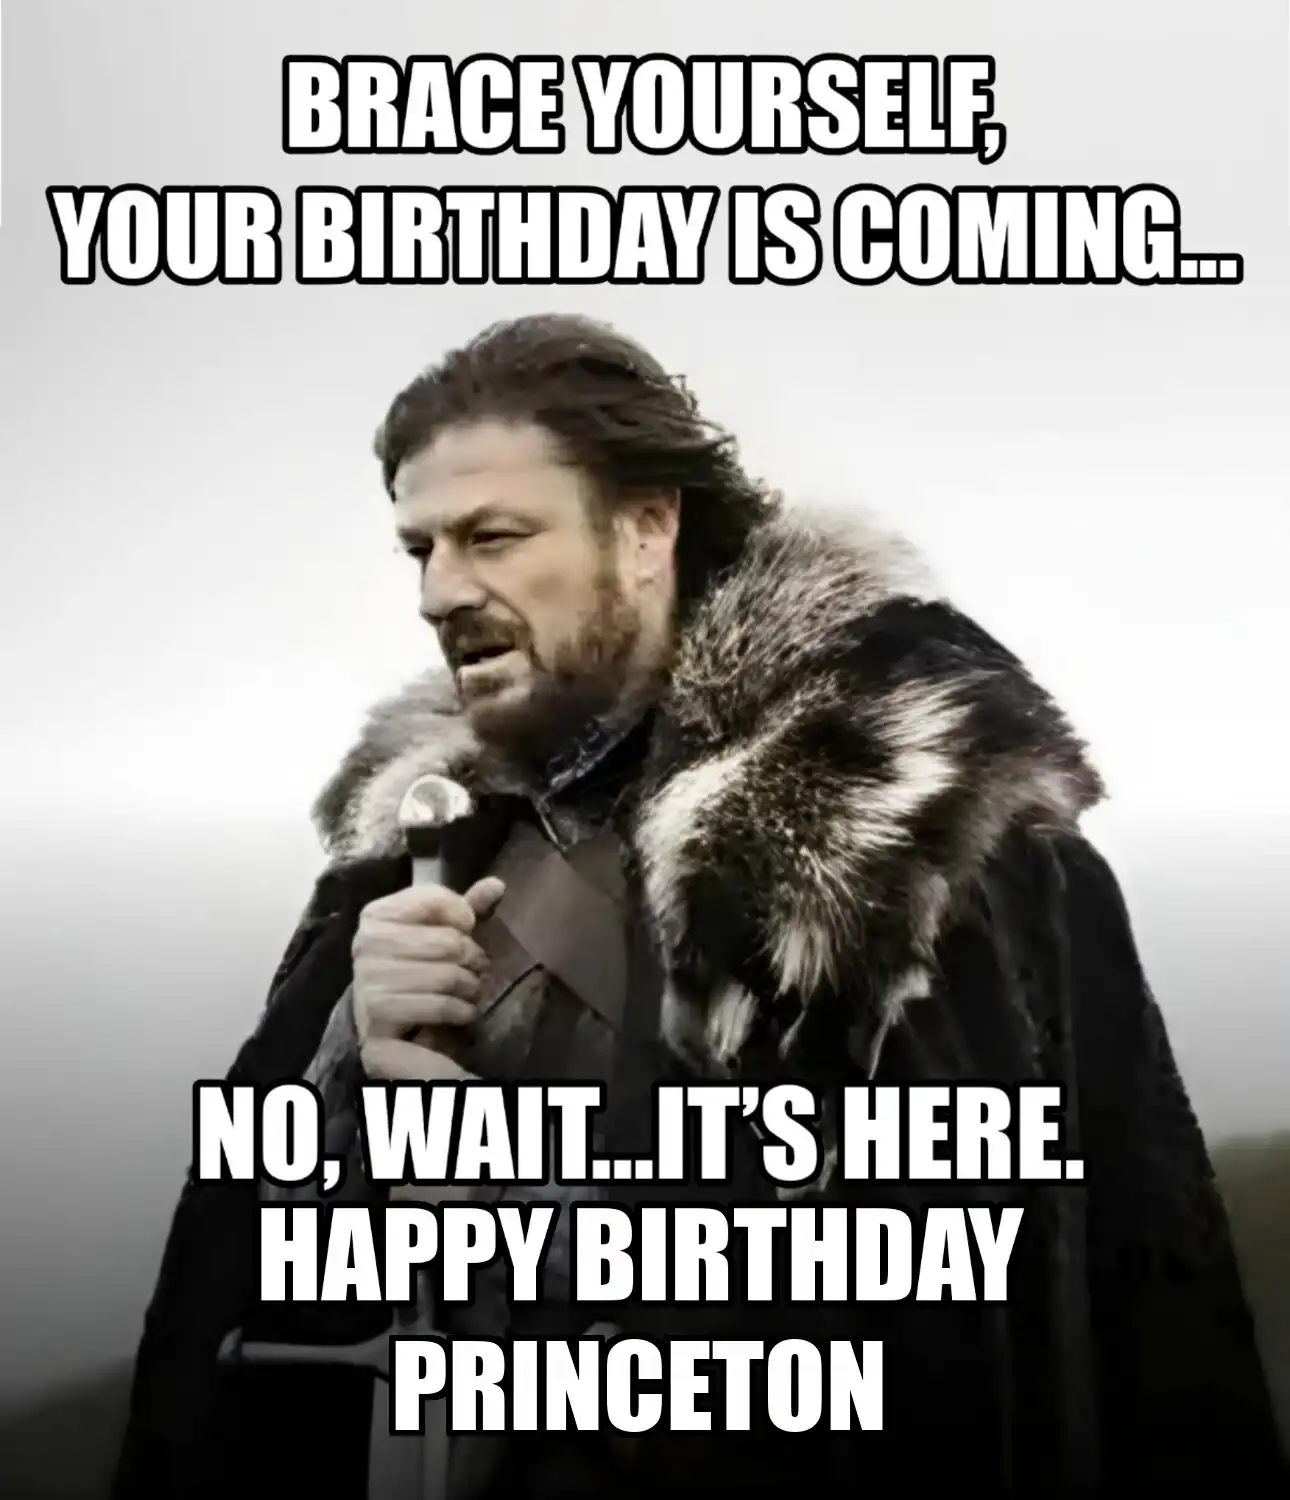 Happy Birthday Princeton Brace Yourself Your Birthday Is Coming Meme